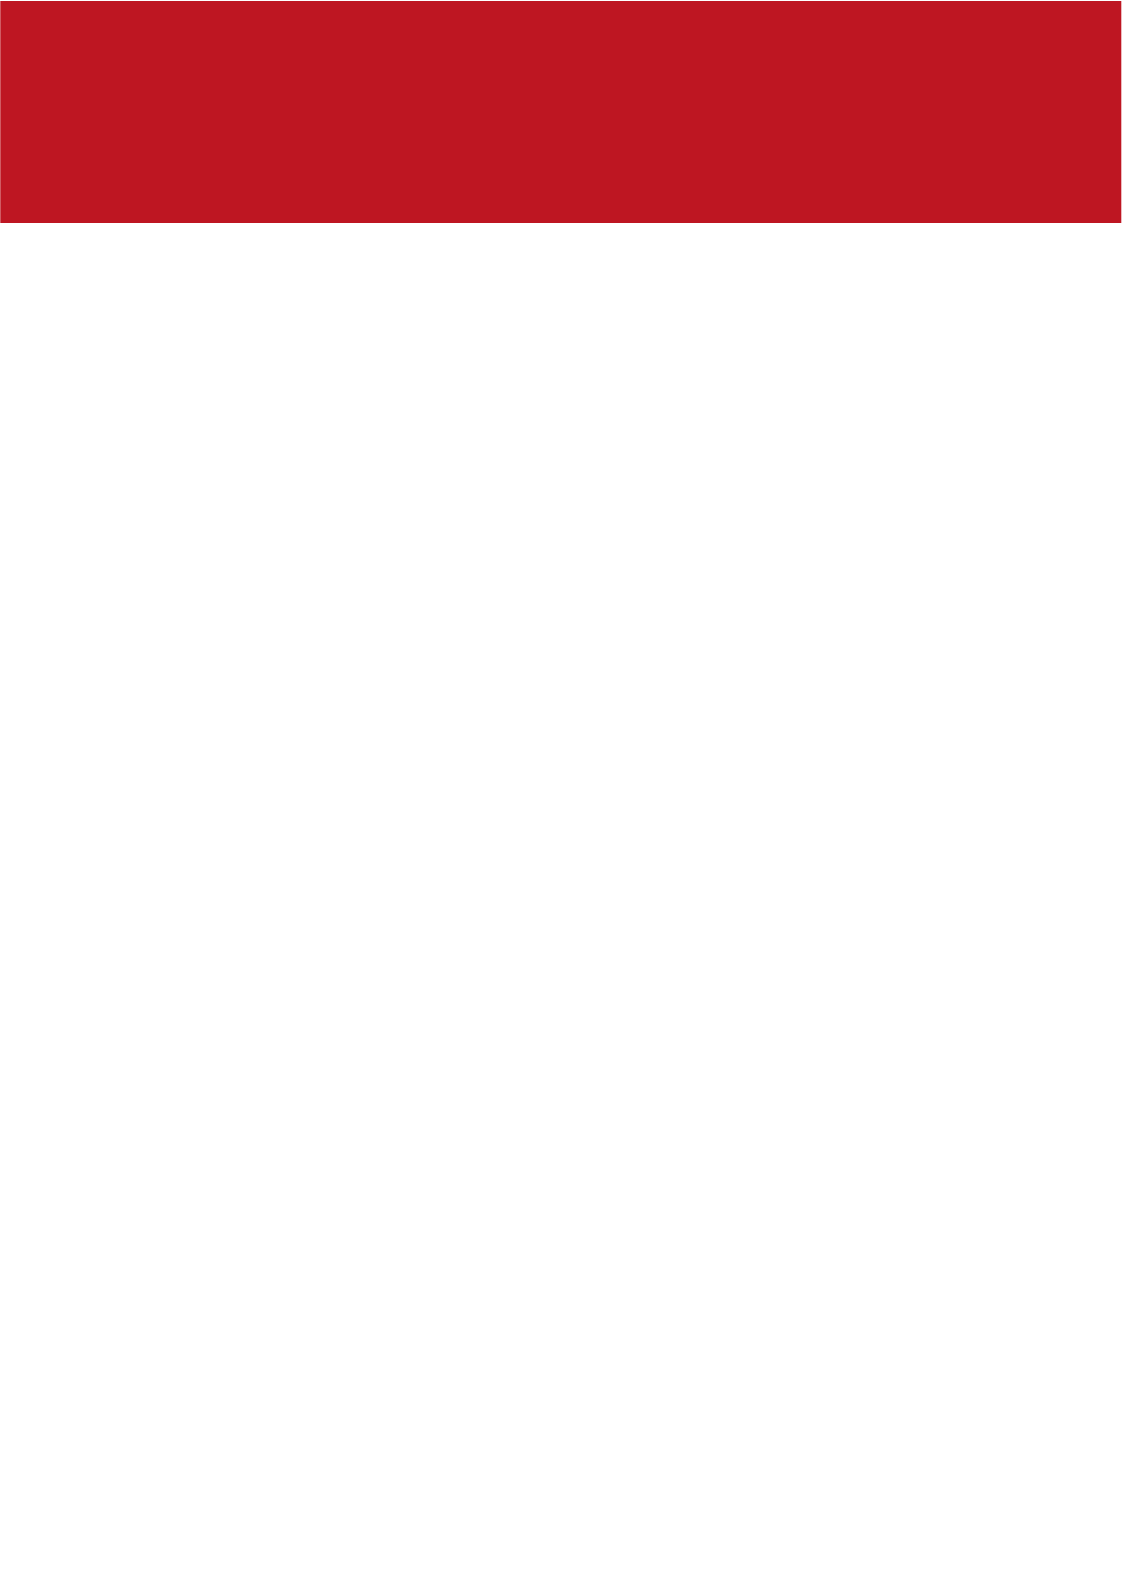 Lectra SA logo for dark backgrounds (transparent PNG)